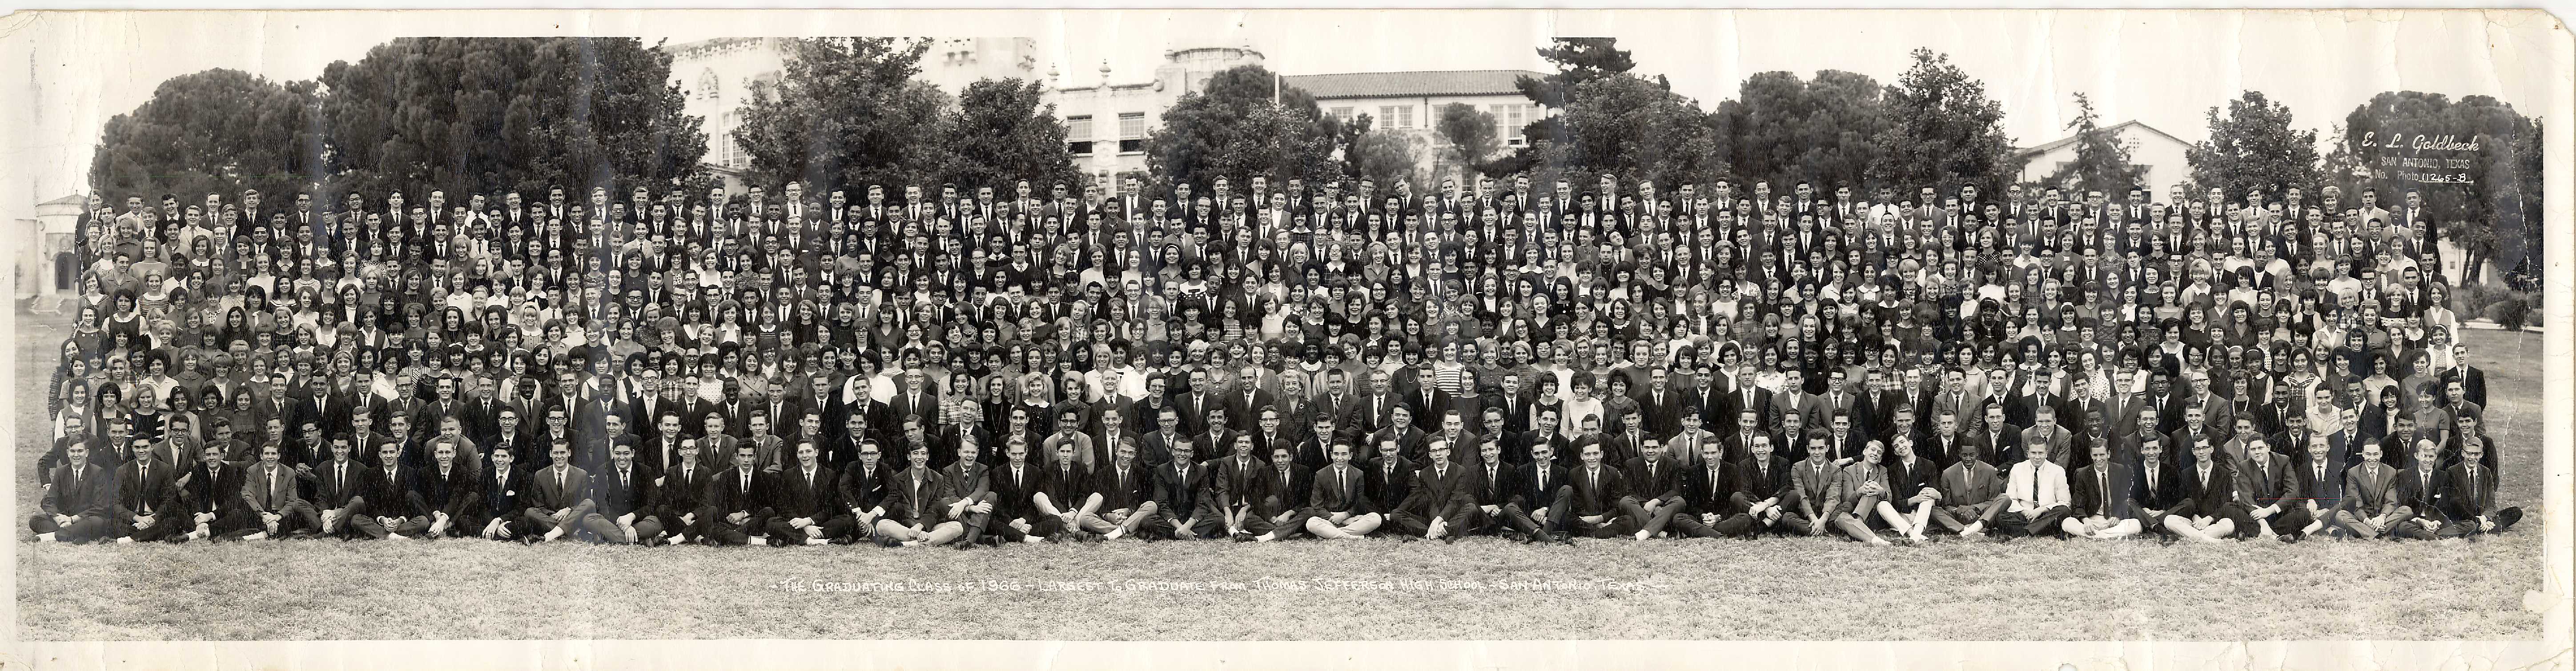 THOMAS JEFFERSON HIGH SCHOOL CLASS of 1966 GOLDBECK PANORAMA PHOTO - (Nov 2, 1965)